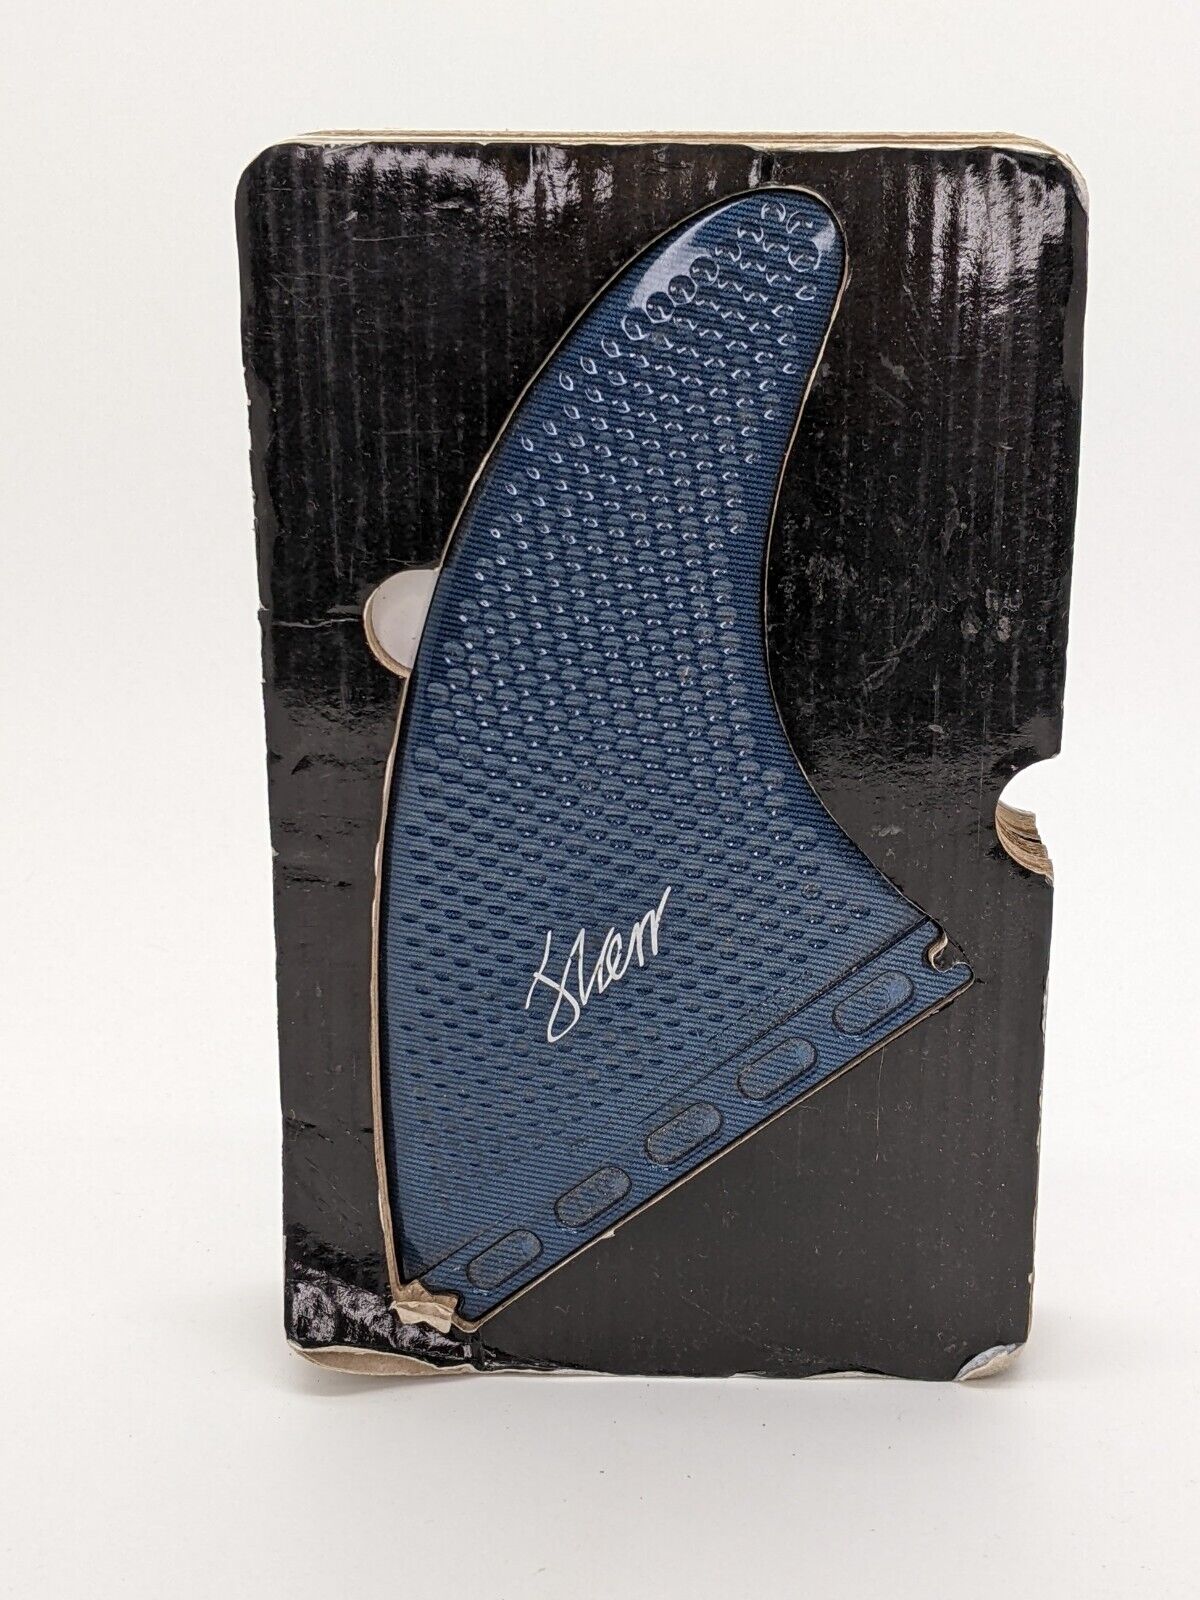 3dfins Josh Kerr Surfboard Set Of 3  Moonrakerr Cobalt Blue Size 7.0